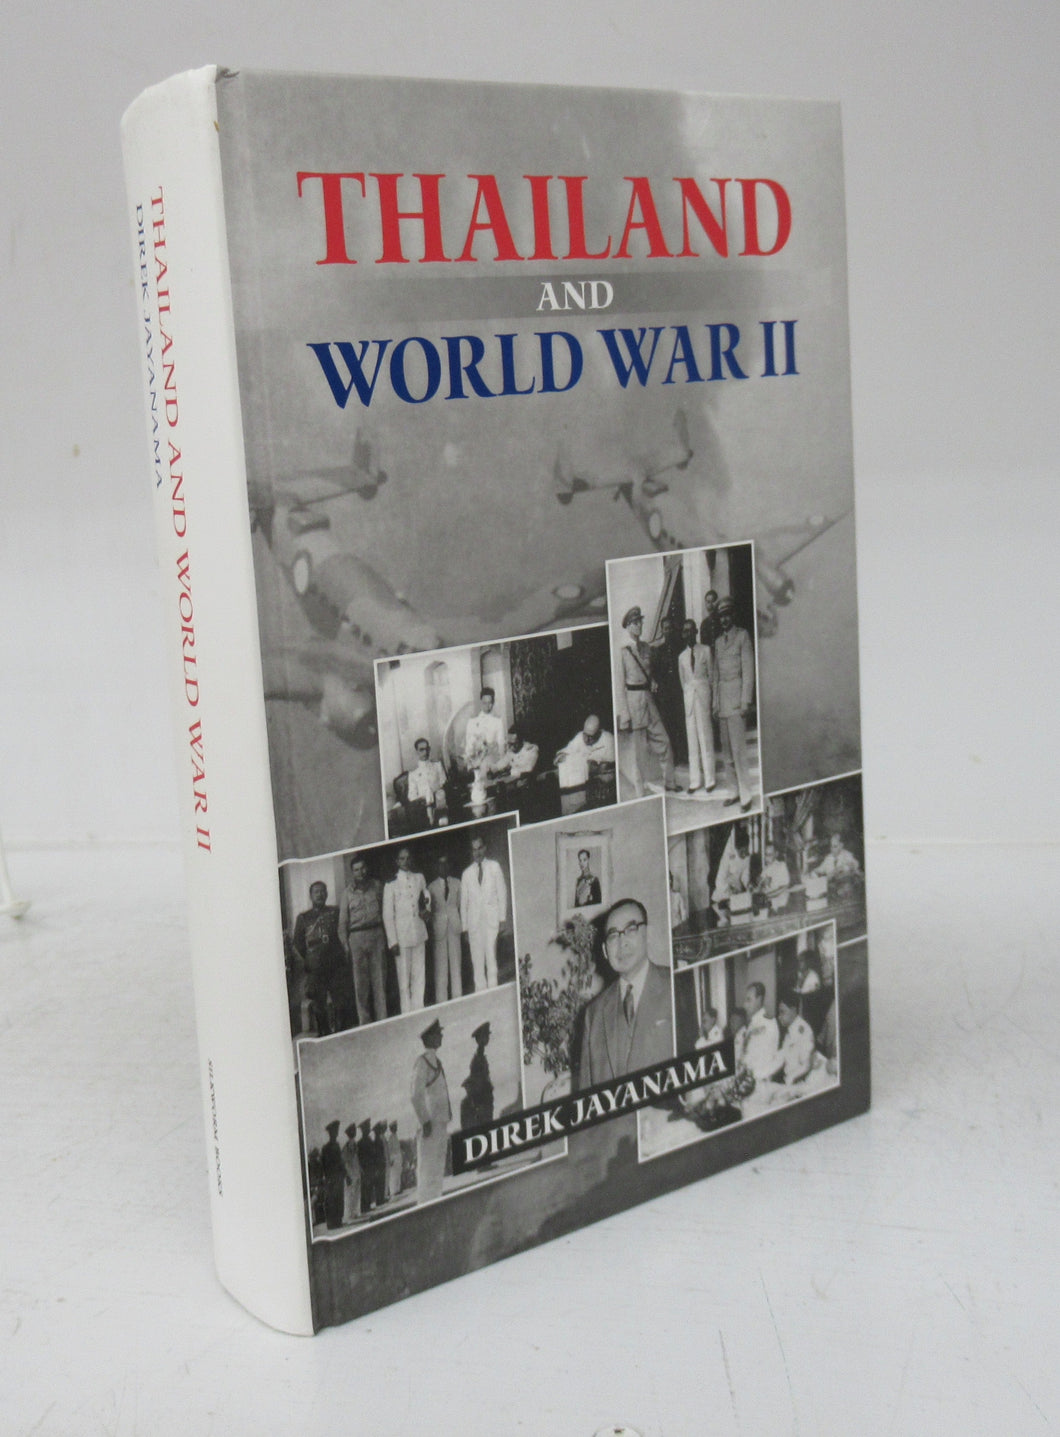 Thailand and World War II